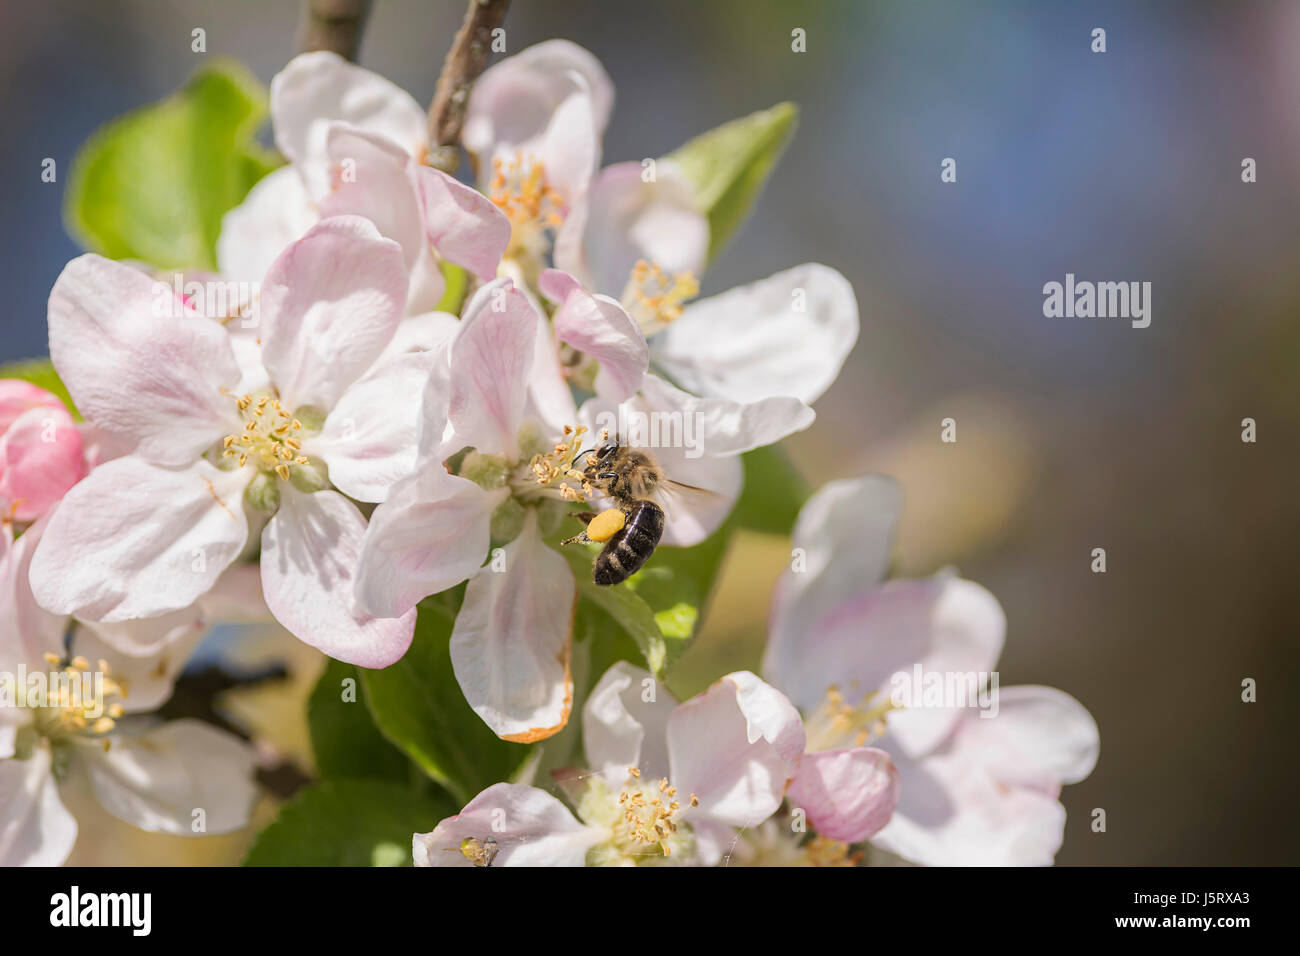 Apple, Malus domestica, Honey bee, Apis mellifera, pollinating apple blossom in a garden. Stock Photo